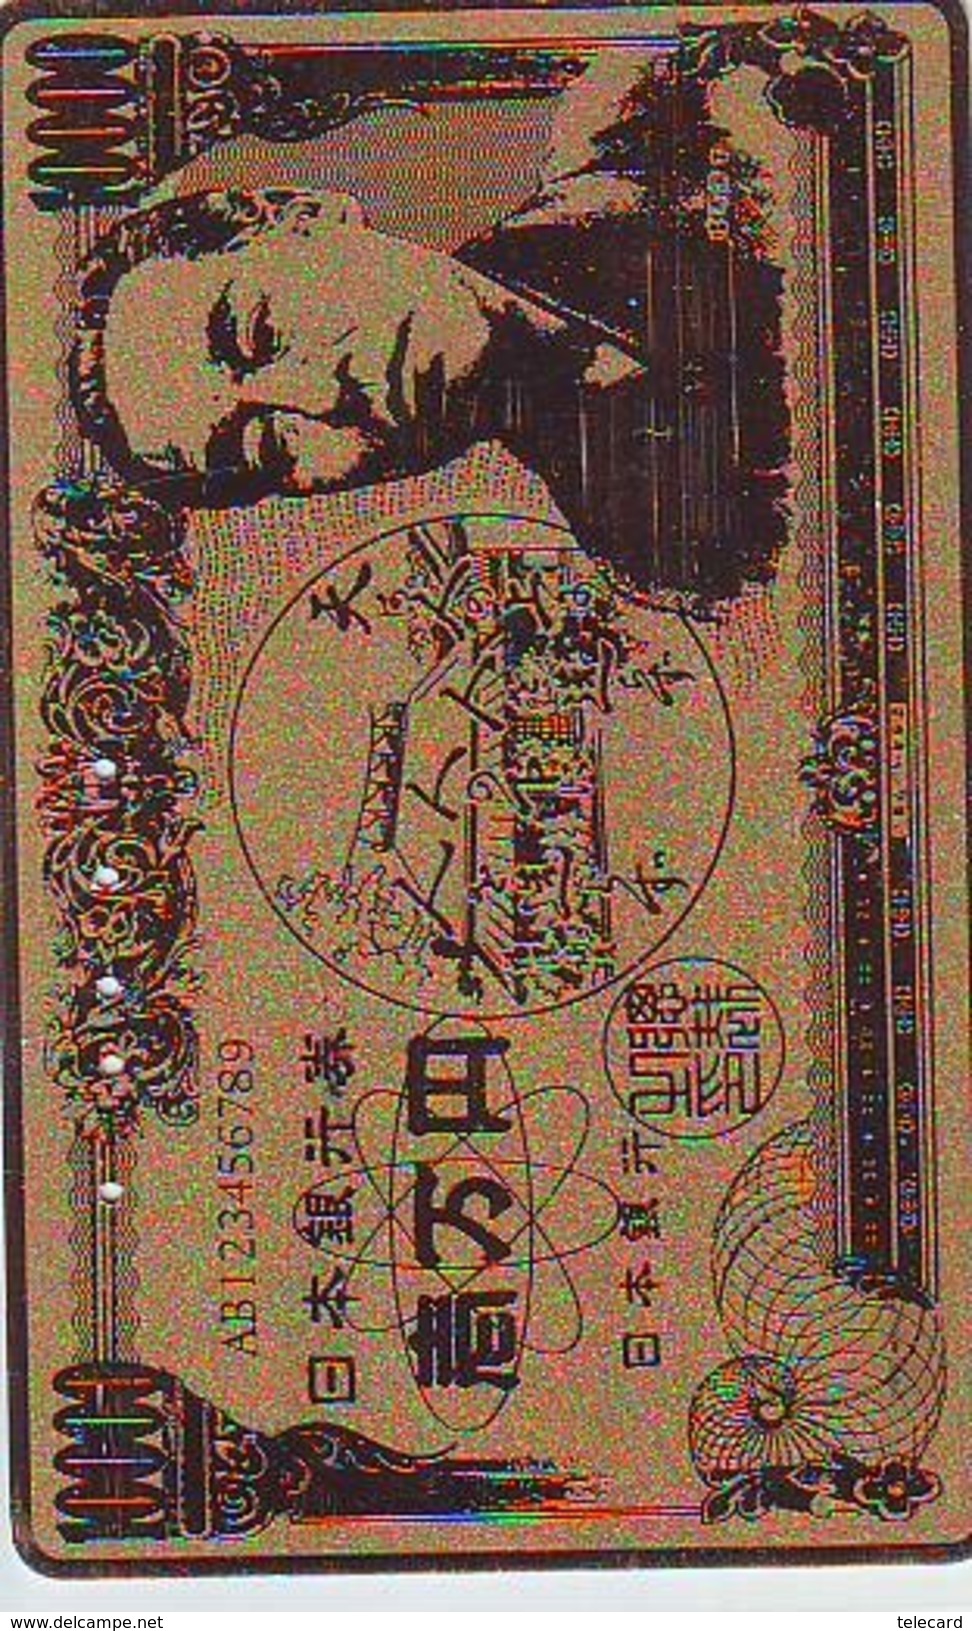 Télécarte JAPON * Billet De Banque (155) Notes Money Banknote Bill * Bankbiljet PHONECARD Japan * Coins * MUNTEN * - Francobolli & Monete